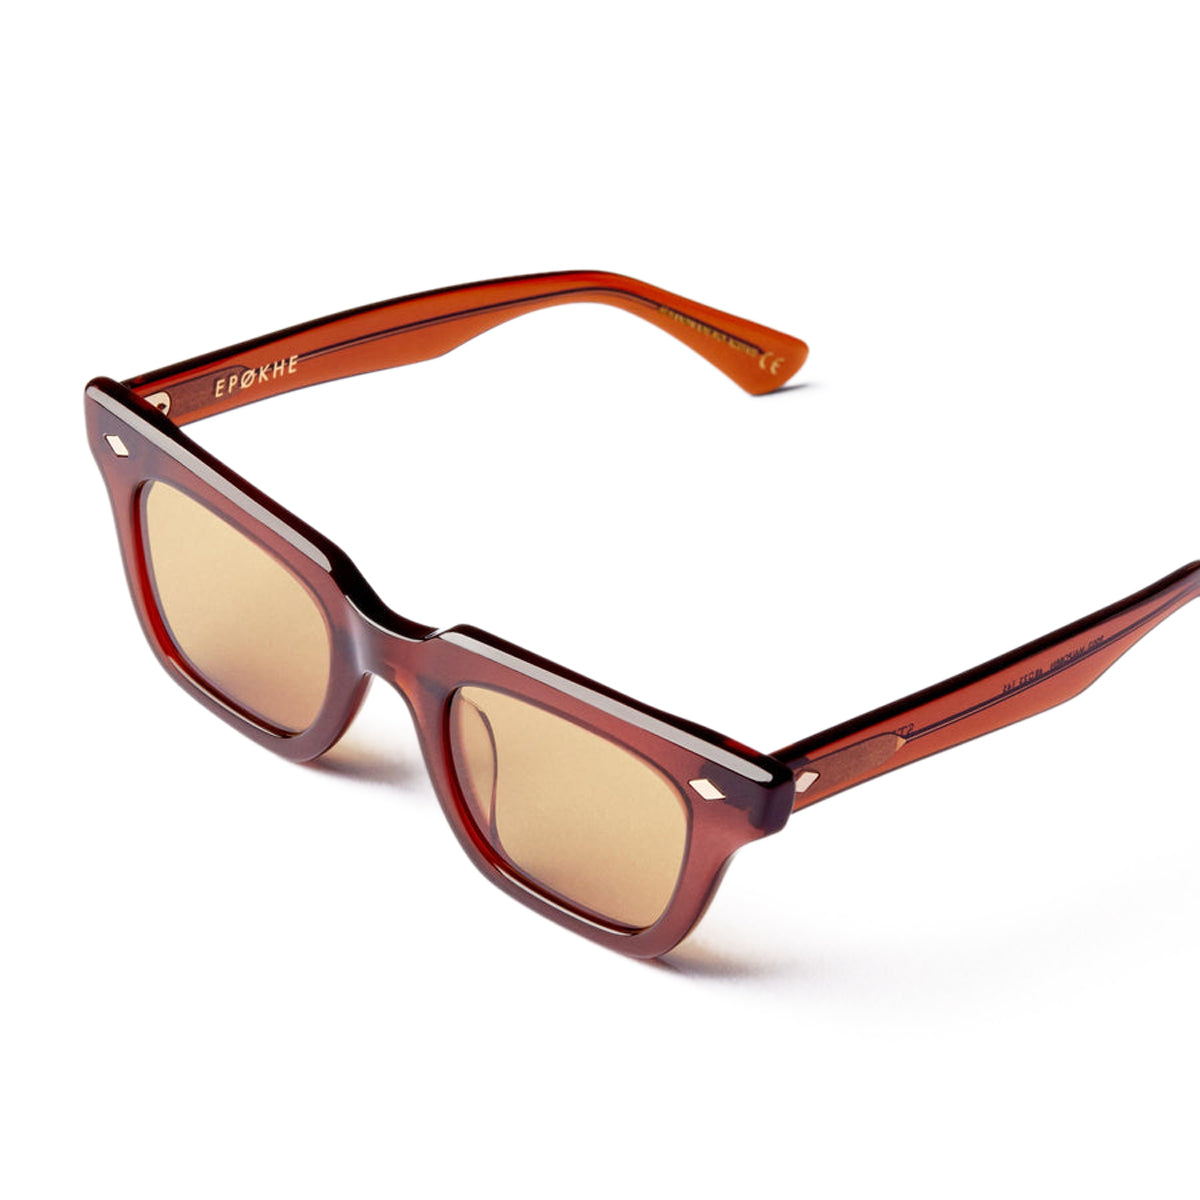 Epokhe Stereo Sunglasses - Maple Polished/Brown image 3